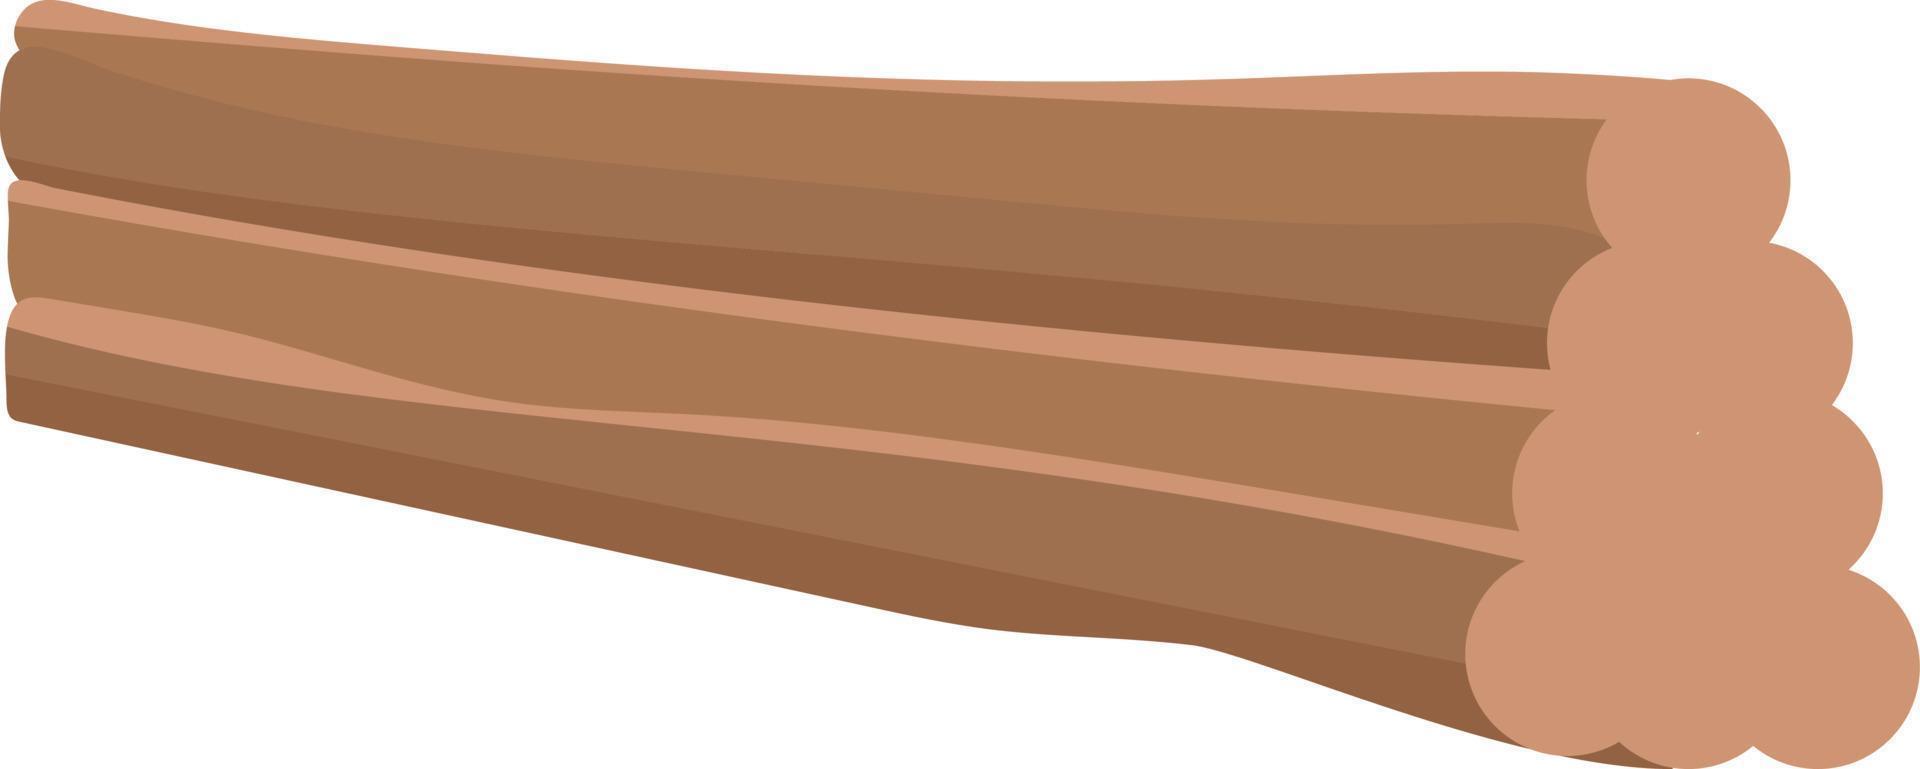 pila de troncos de madera objeto de vector de color semiplano